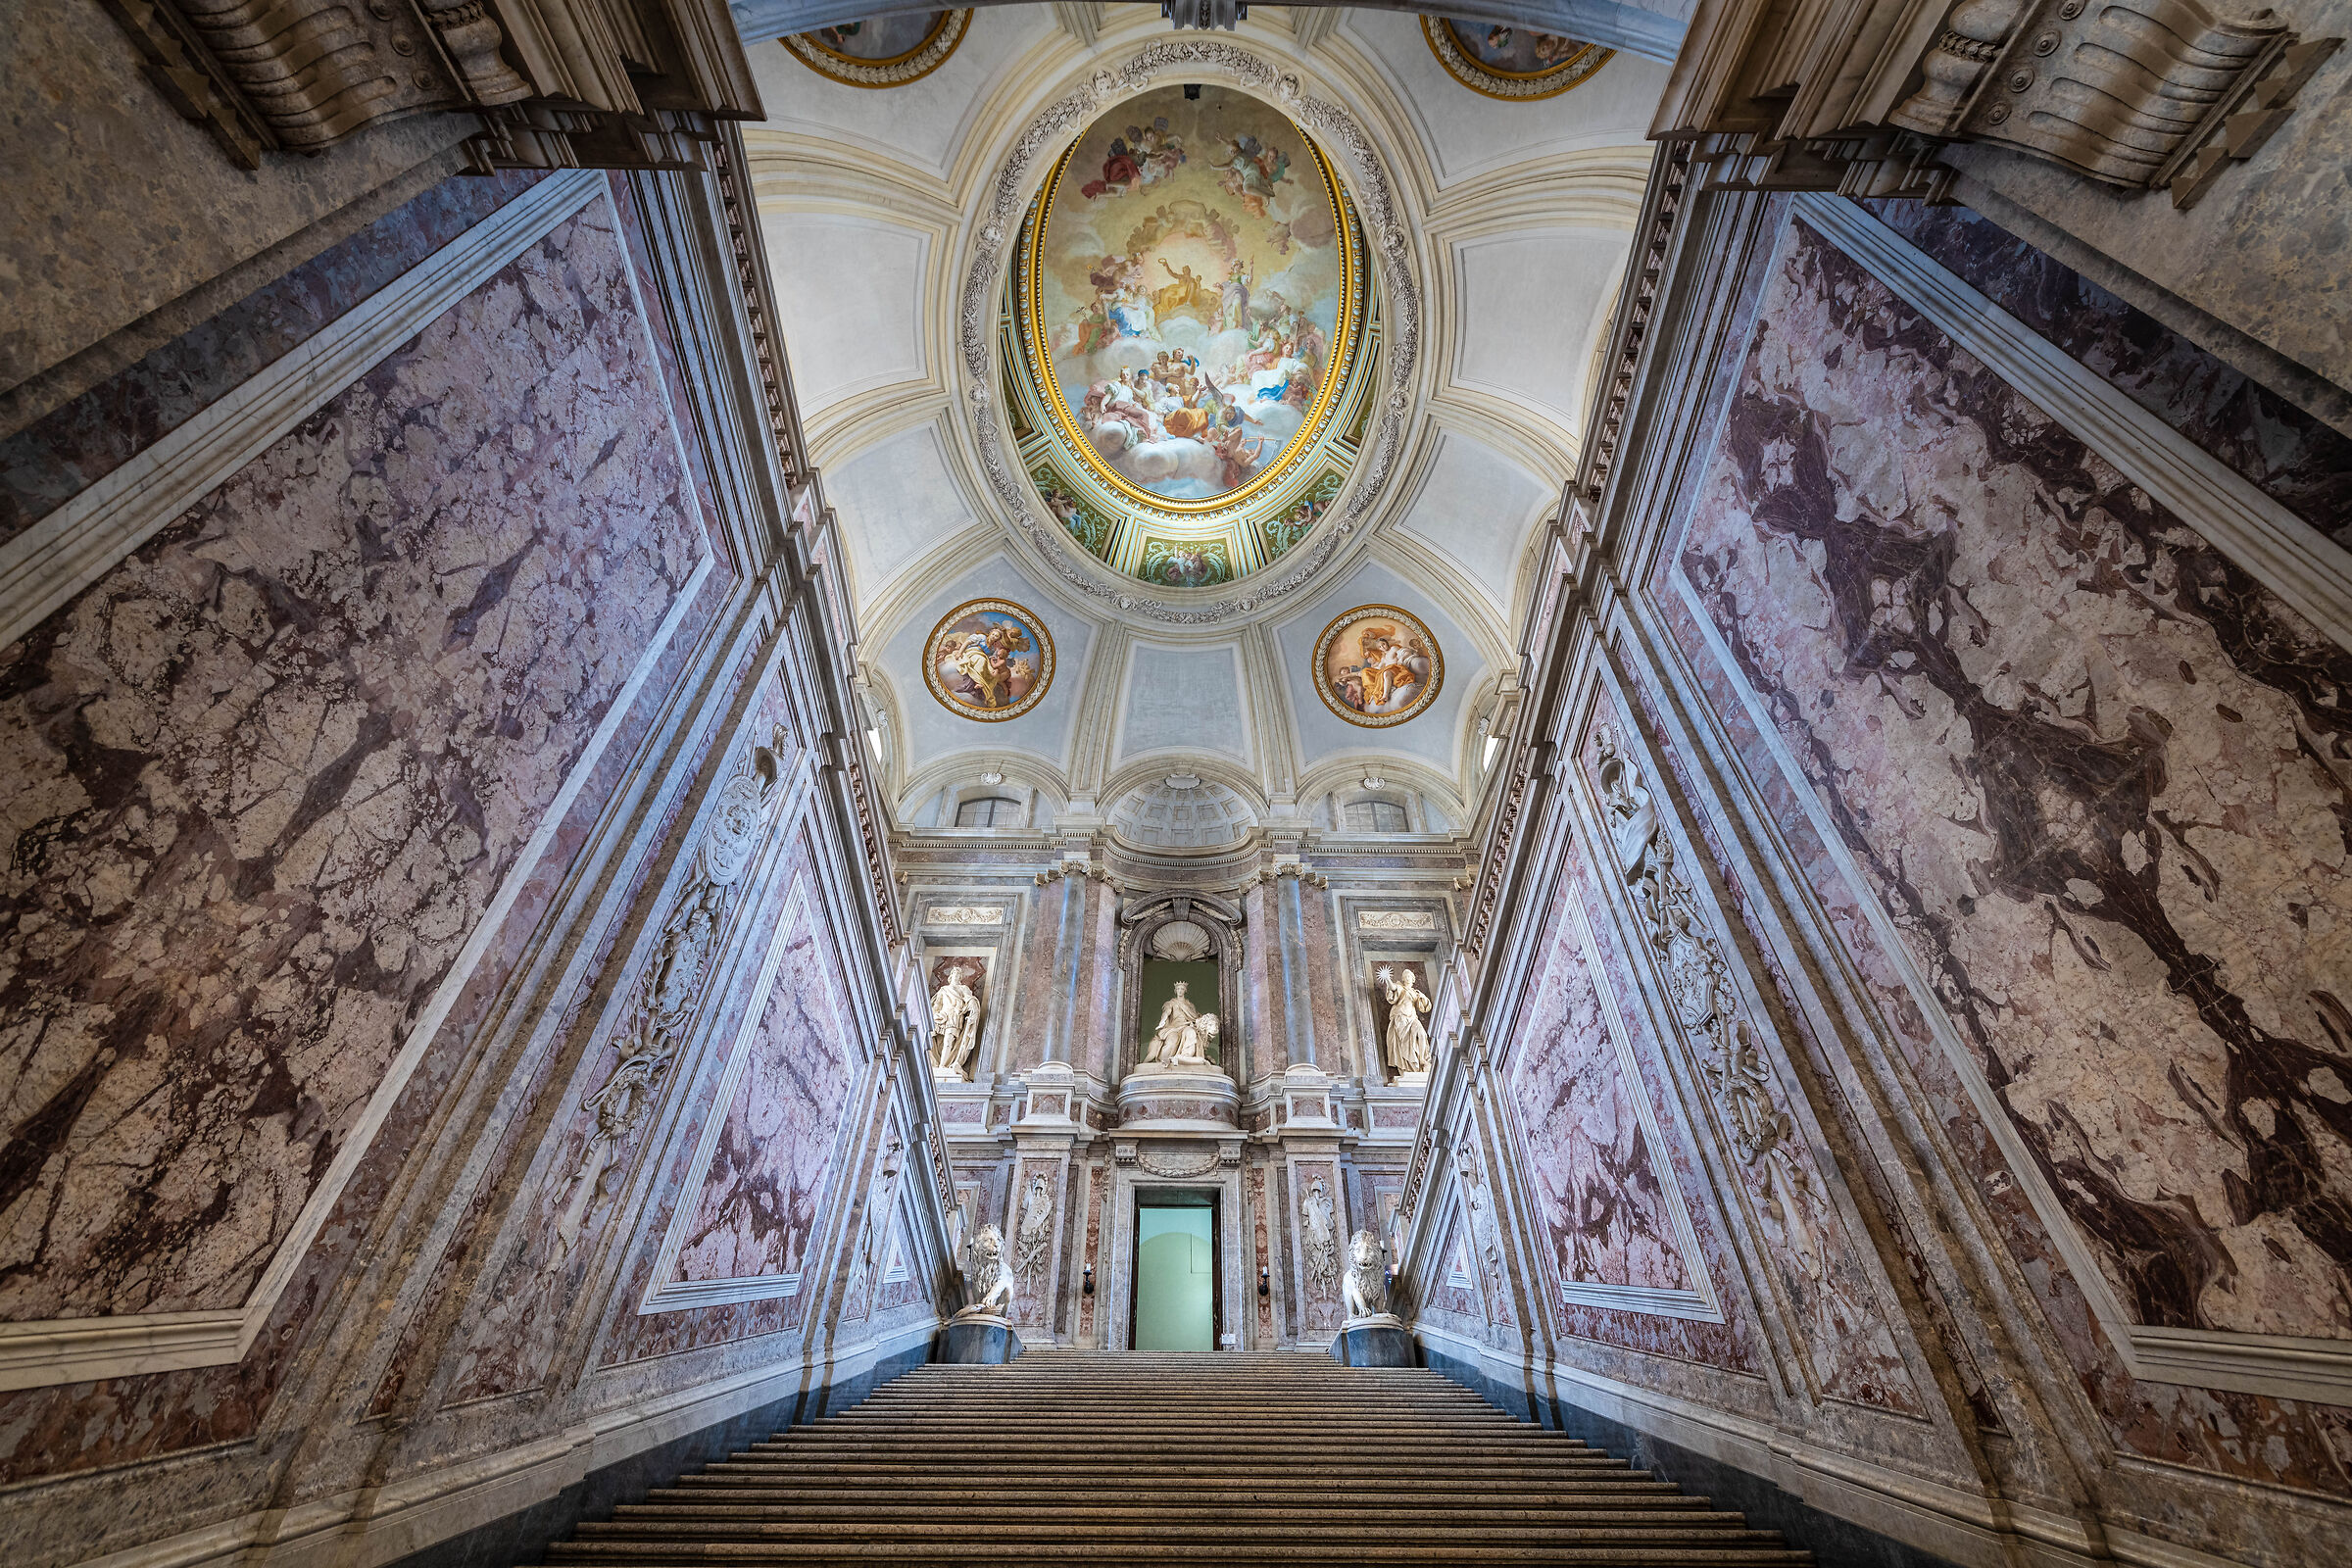 Royal Palace Caserta - Staircase entrance...